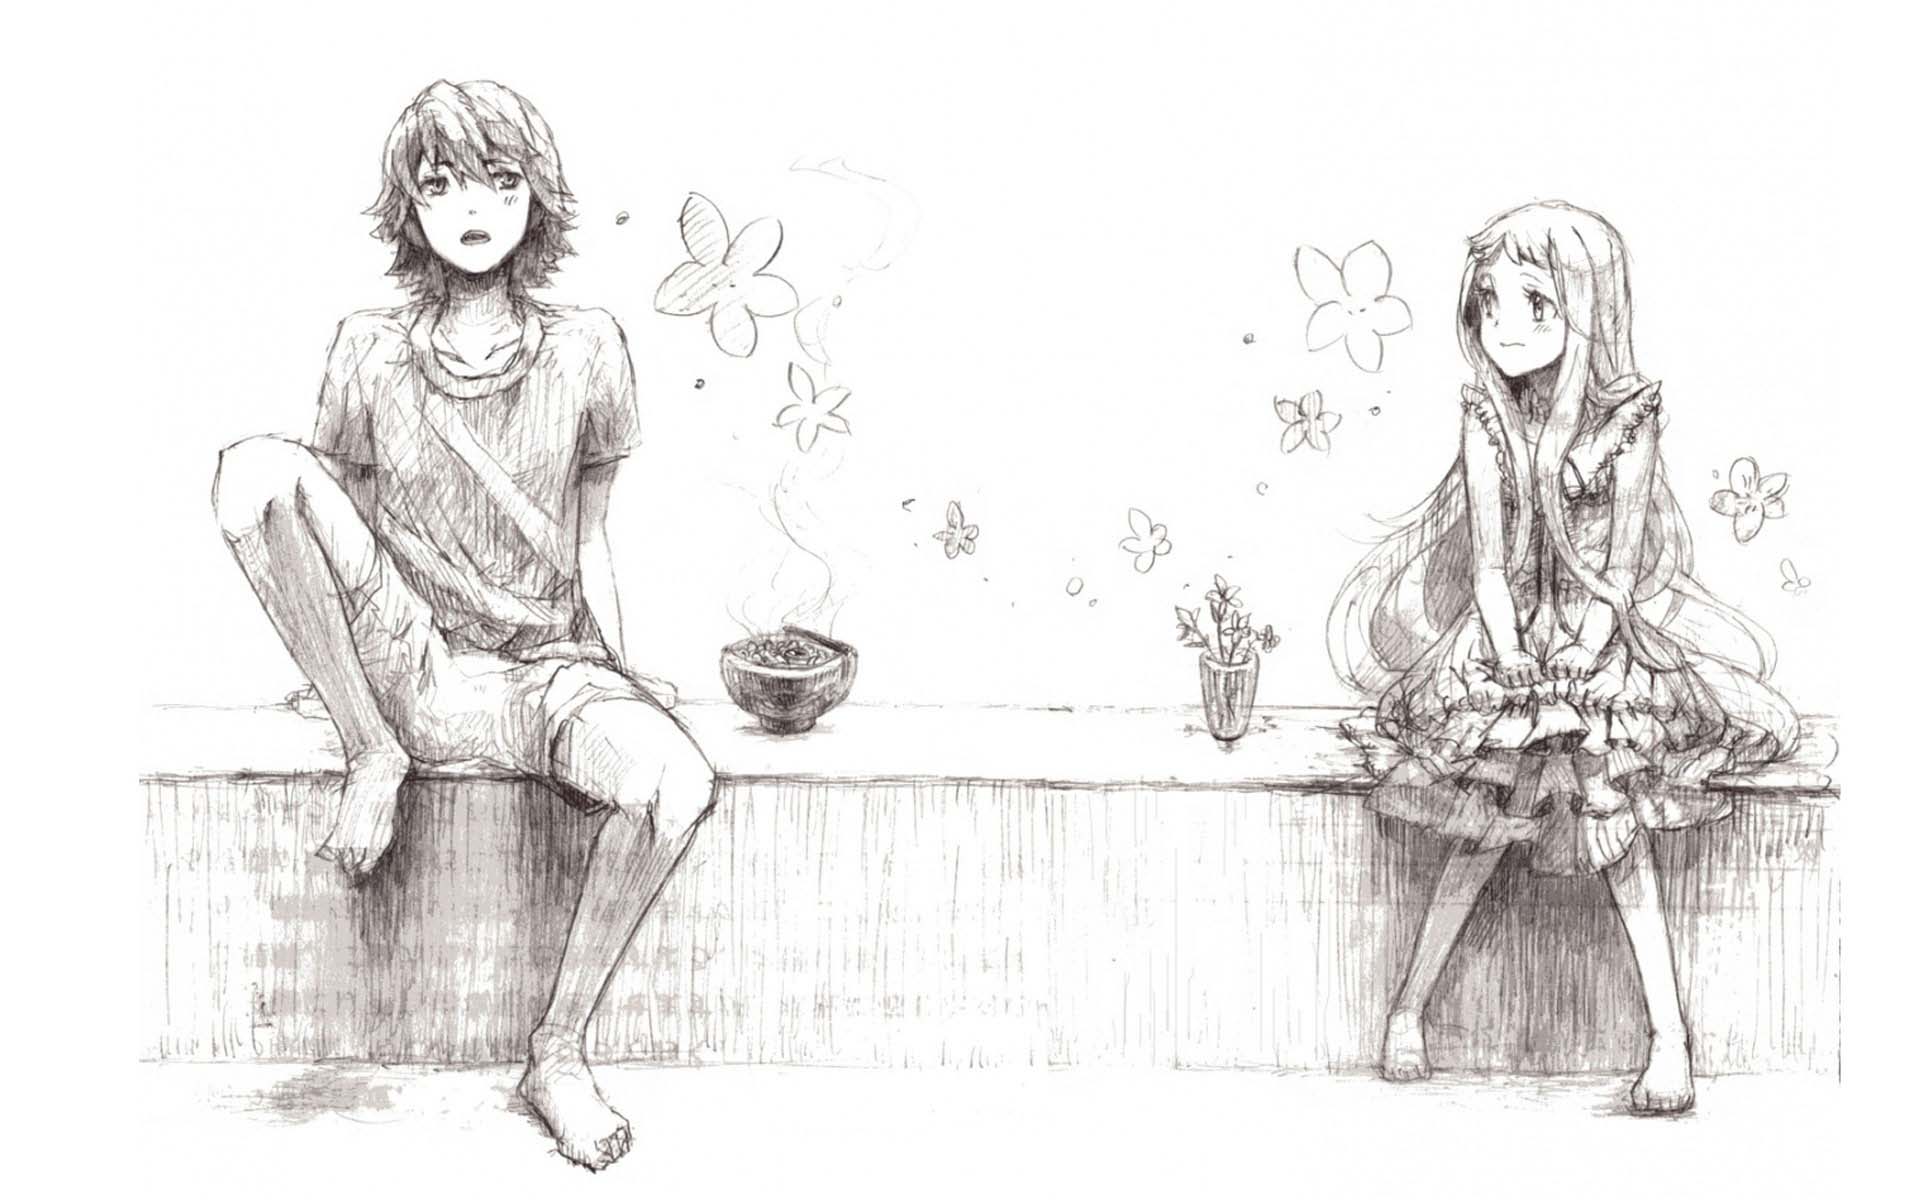 Cute Drawing Wallpaper Anime Girl Staring At Boy 19x10 Wallpaper Teahub Io